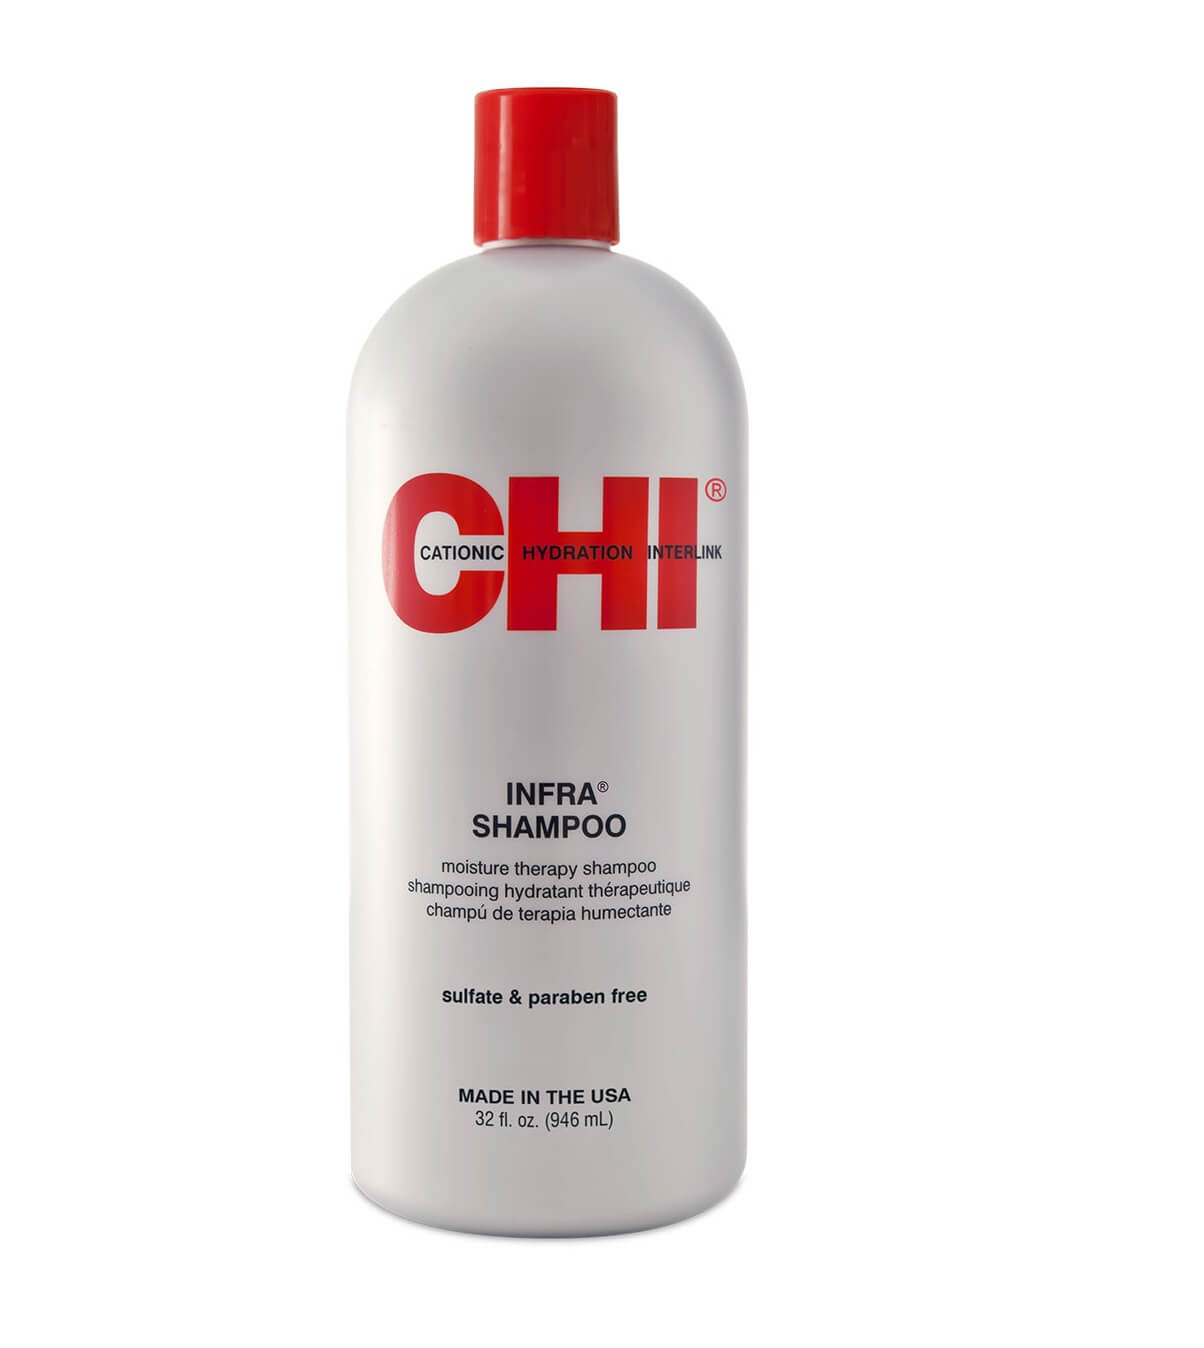 CHI Infra Shampoo 946ml